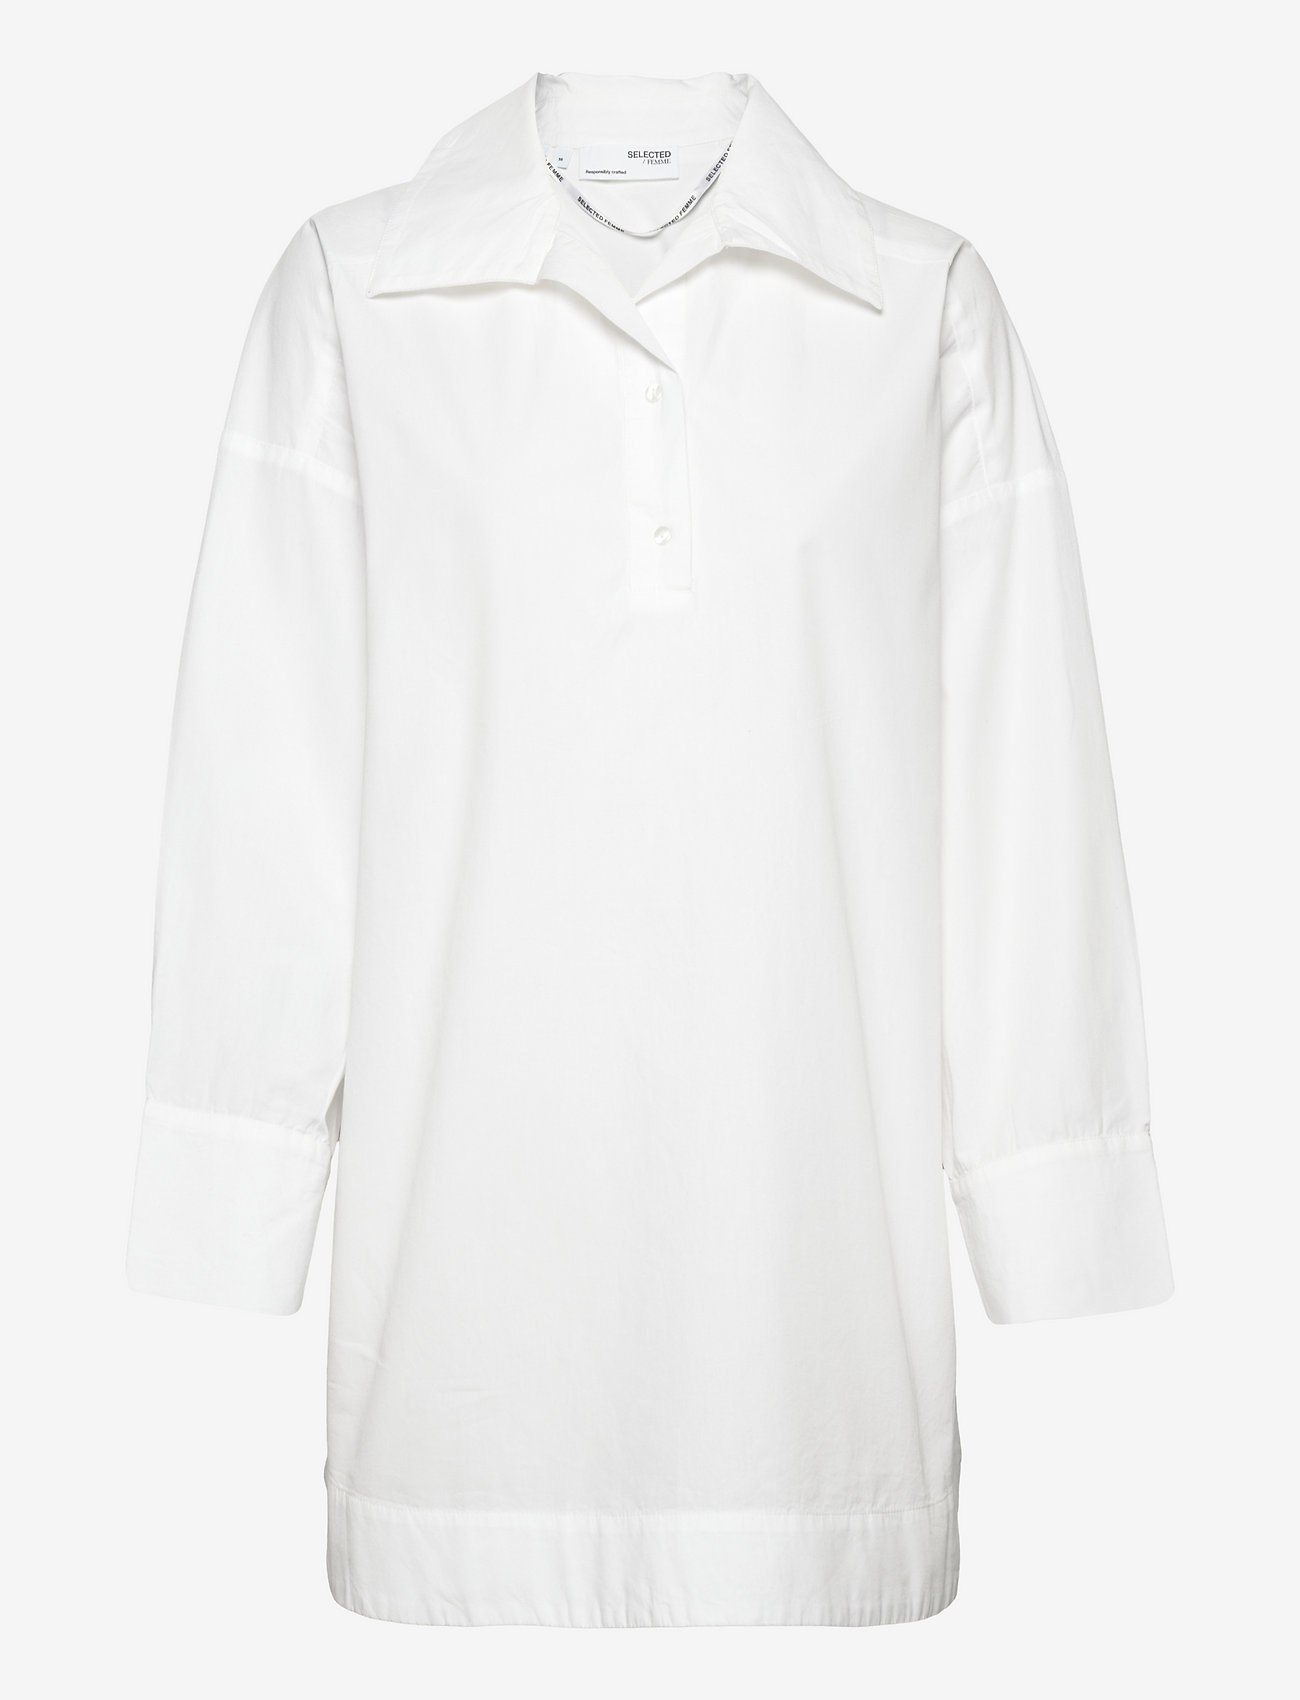 Selected Femme - SLFKIKI LS LONG SHIRT W - långärmade skjortor - bright white - 0